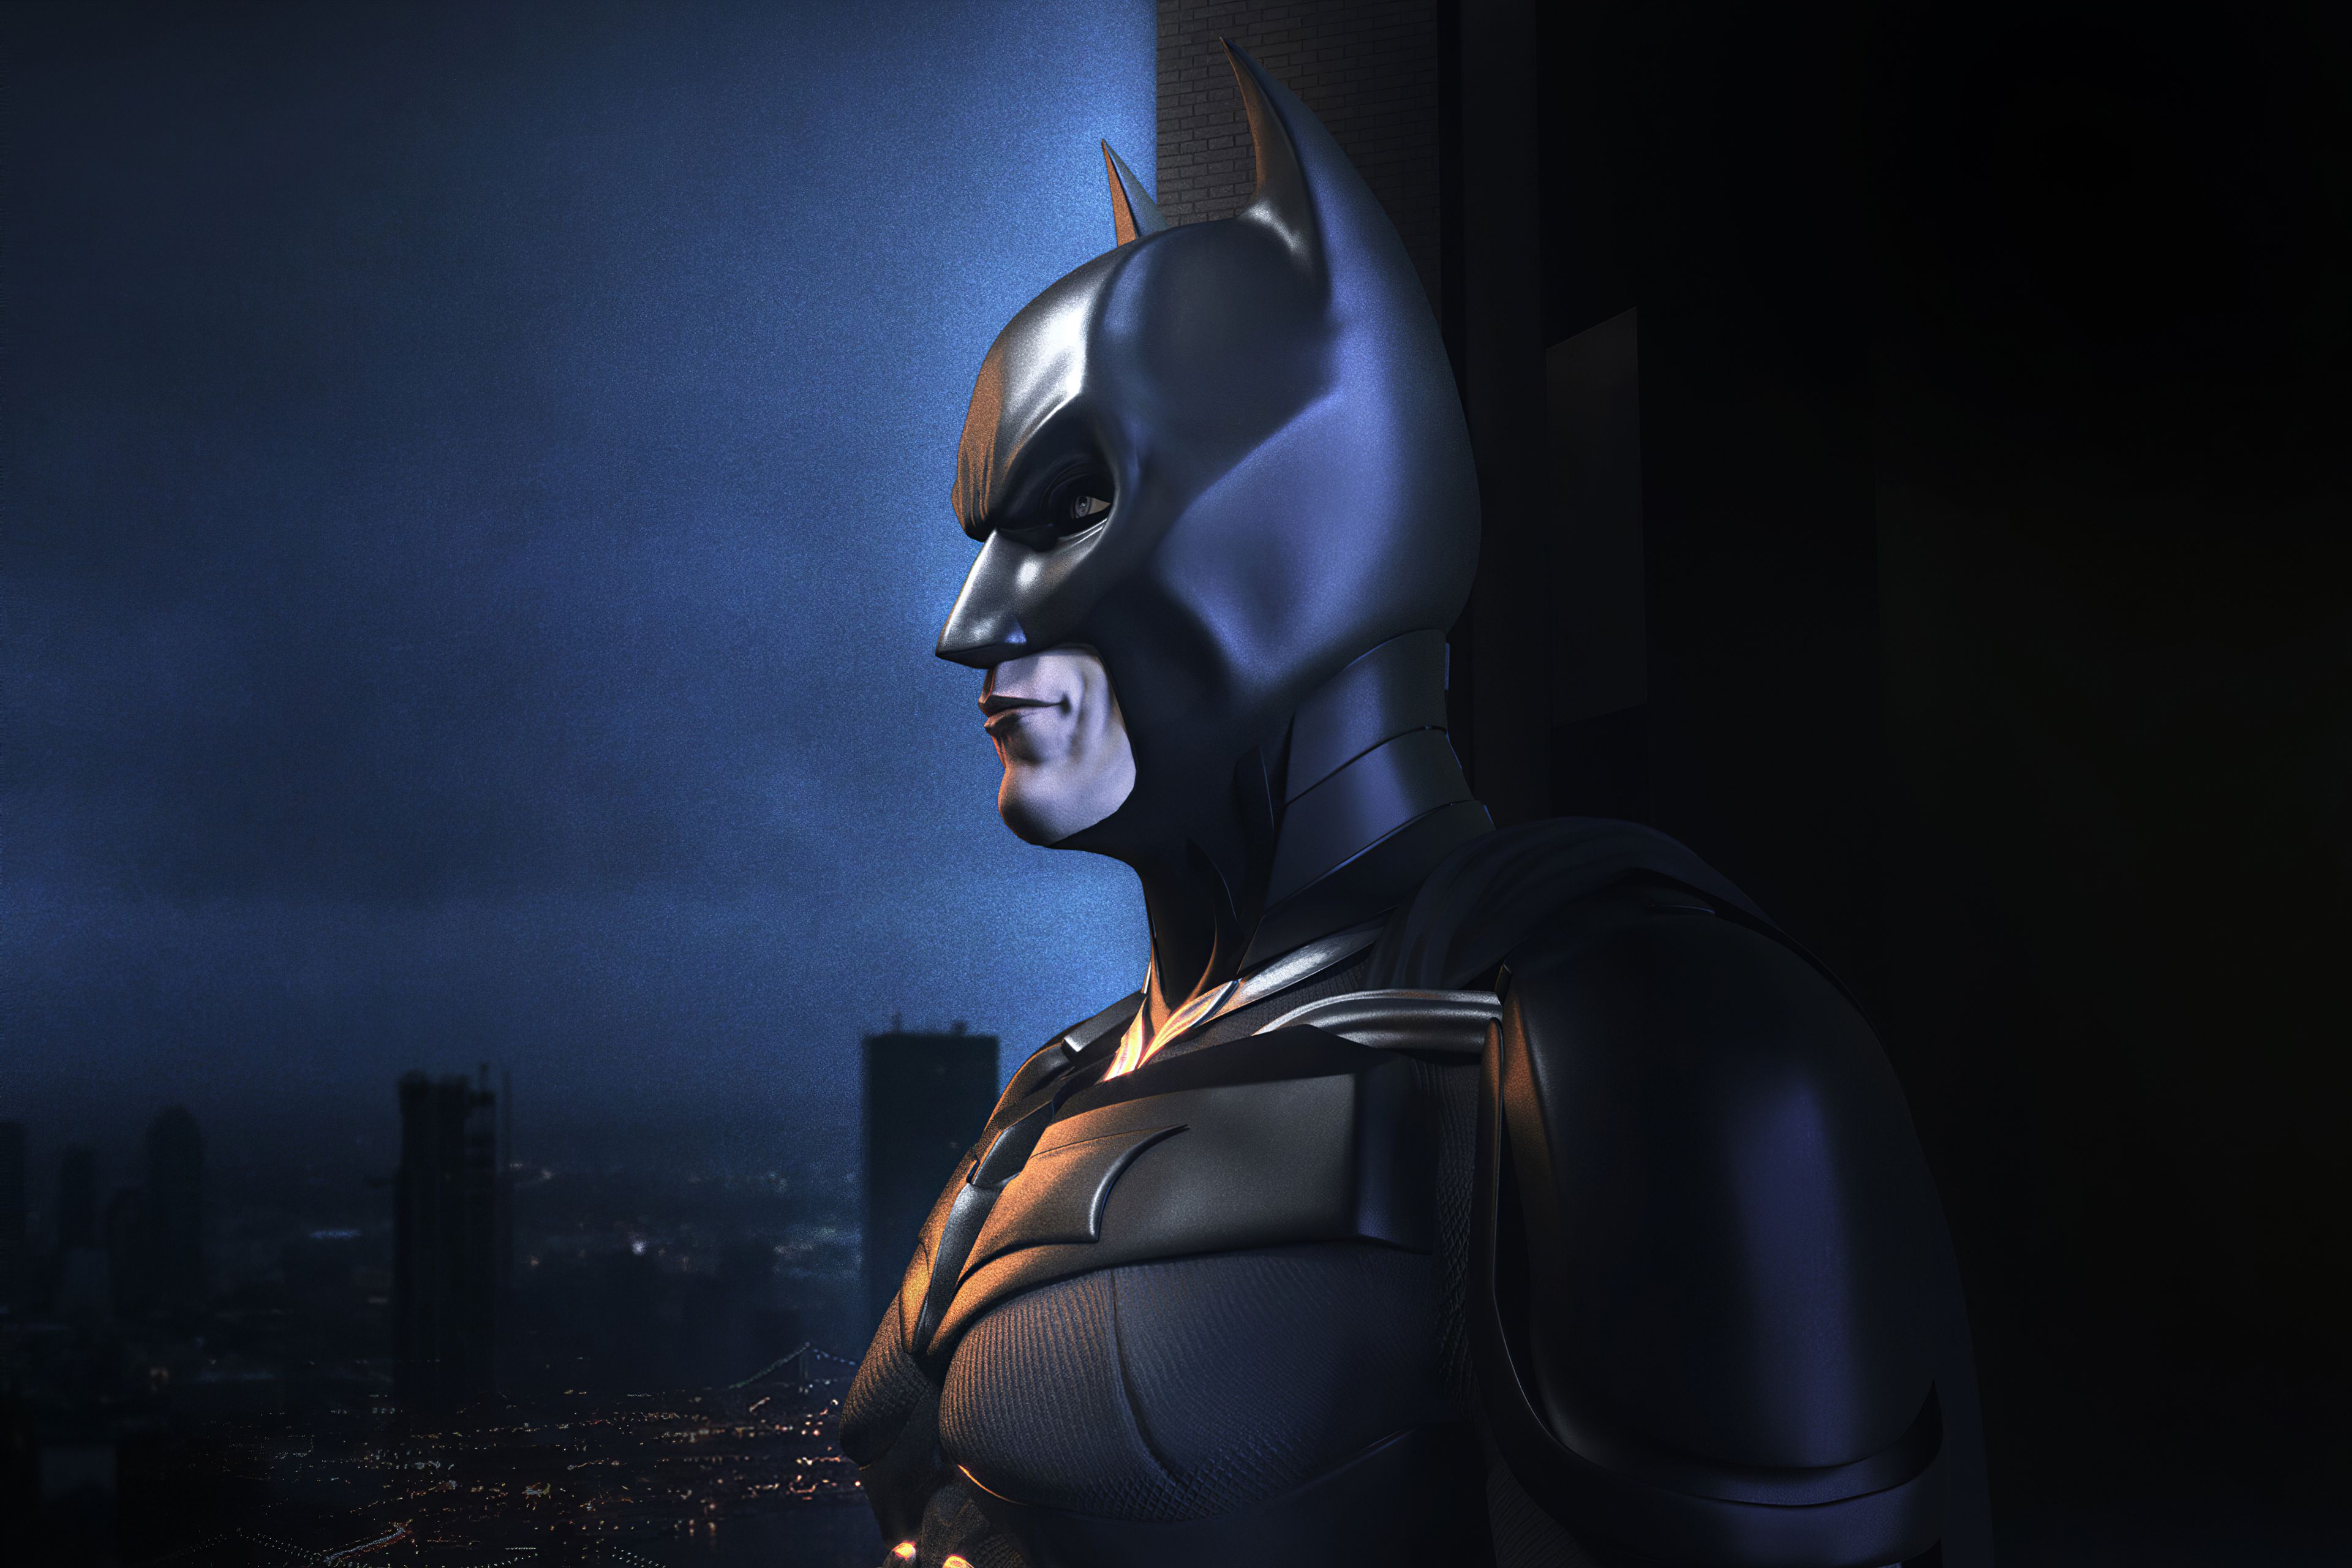 Batman 4K wallpaper for your desktop or mobile screen free